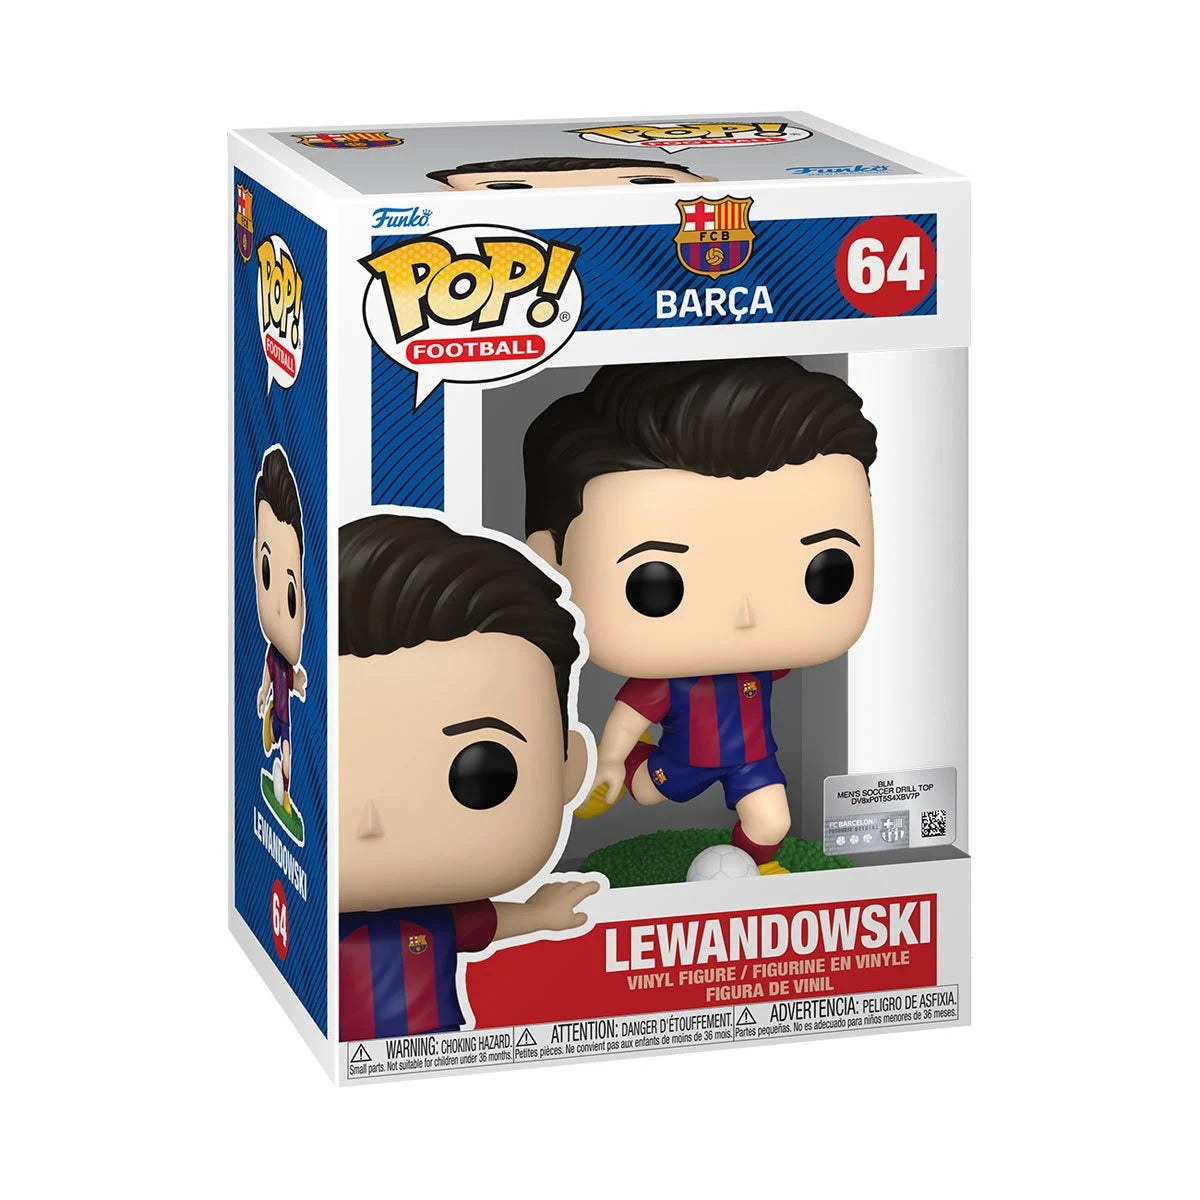 Funko Pop Football: Barcelona - Lewandowski